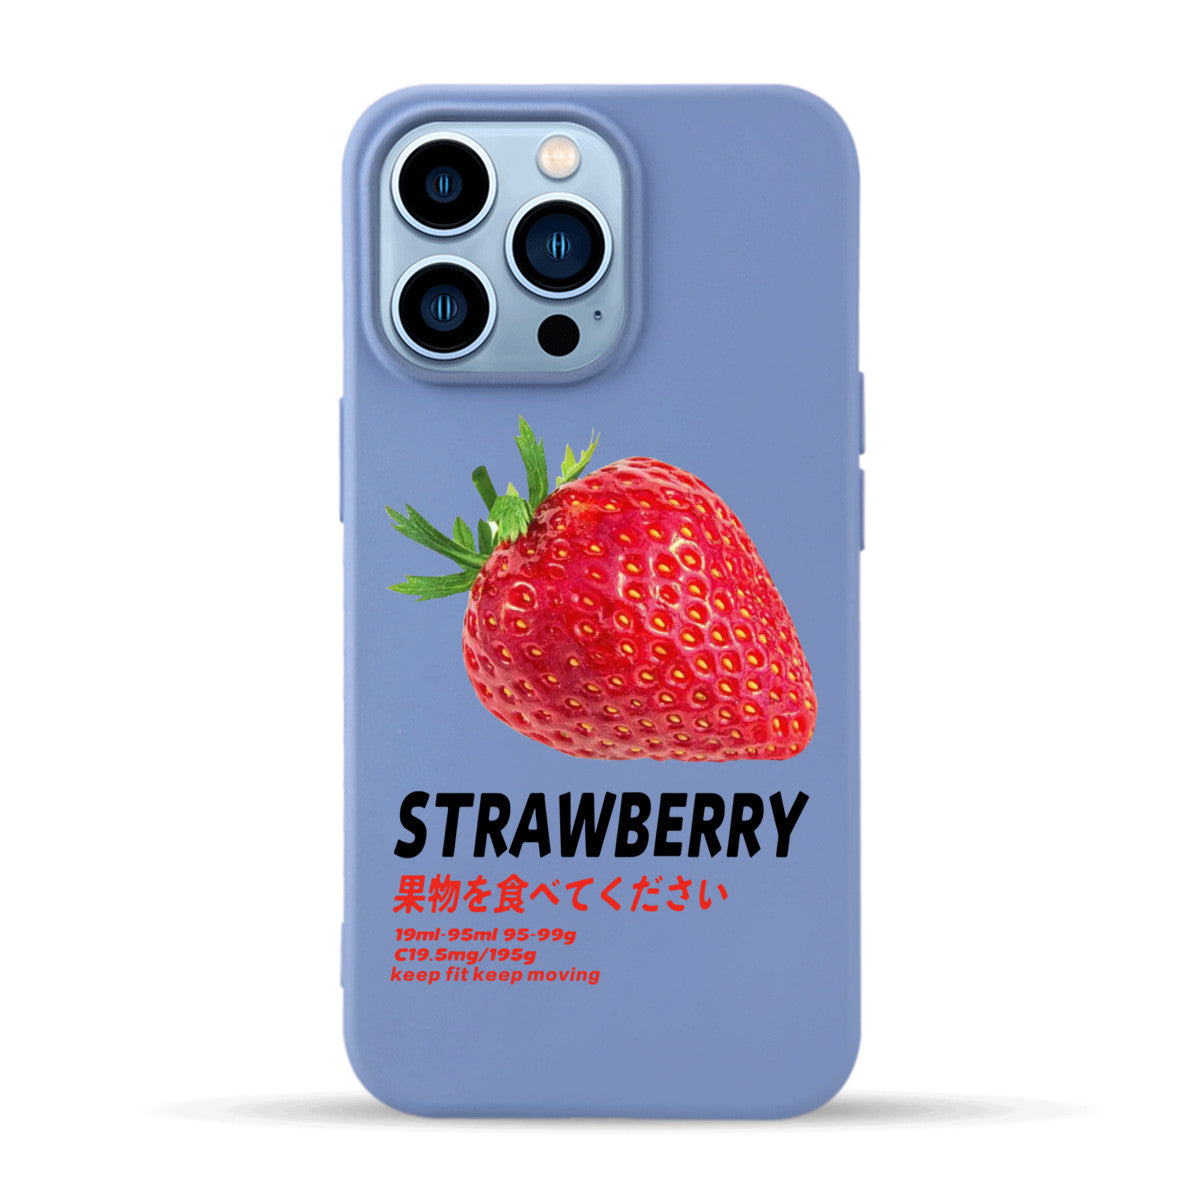 Strawberry - iPhone Case